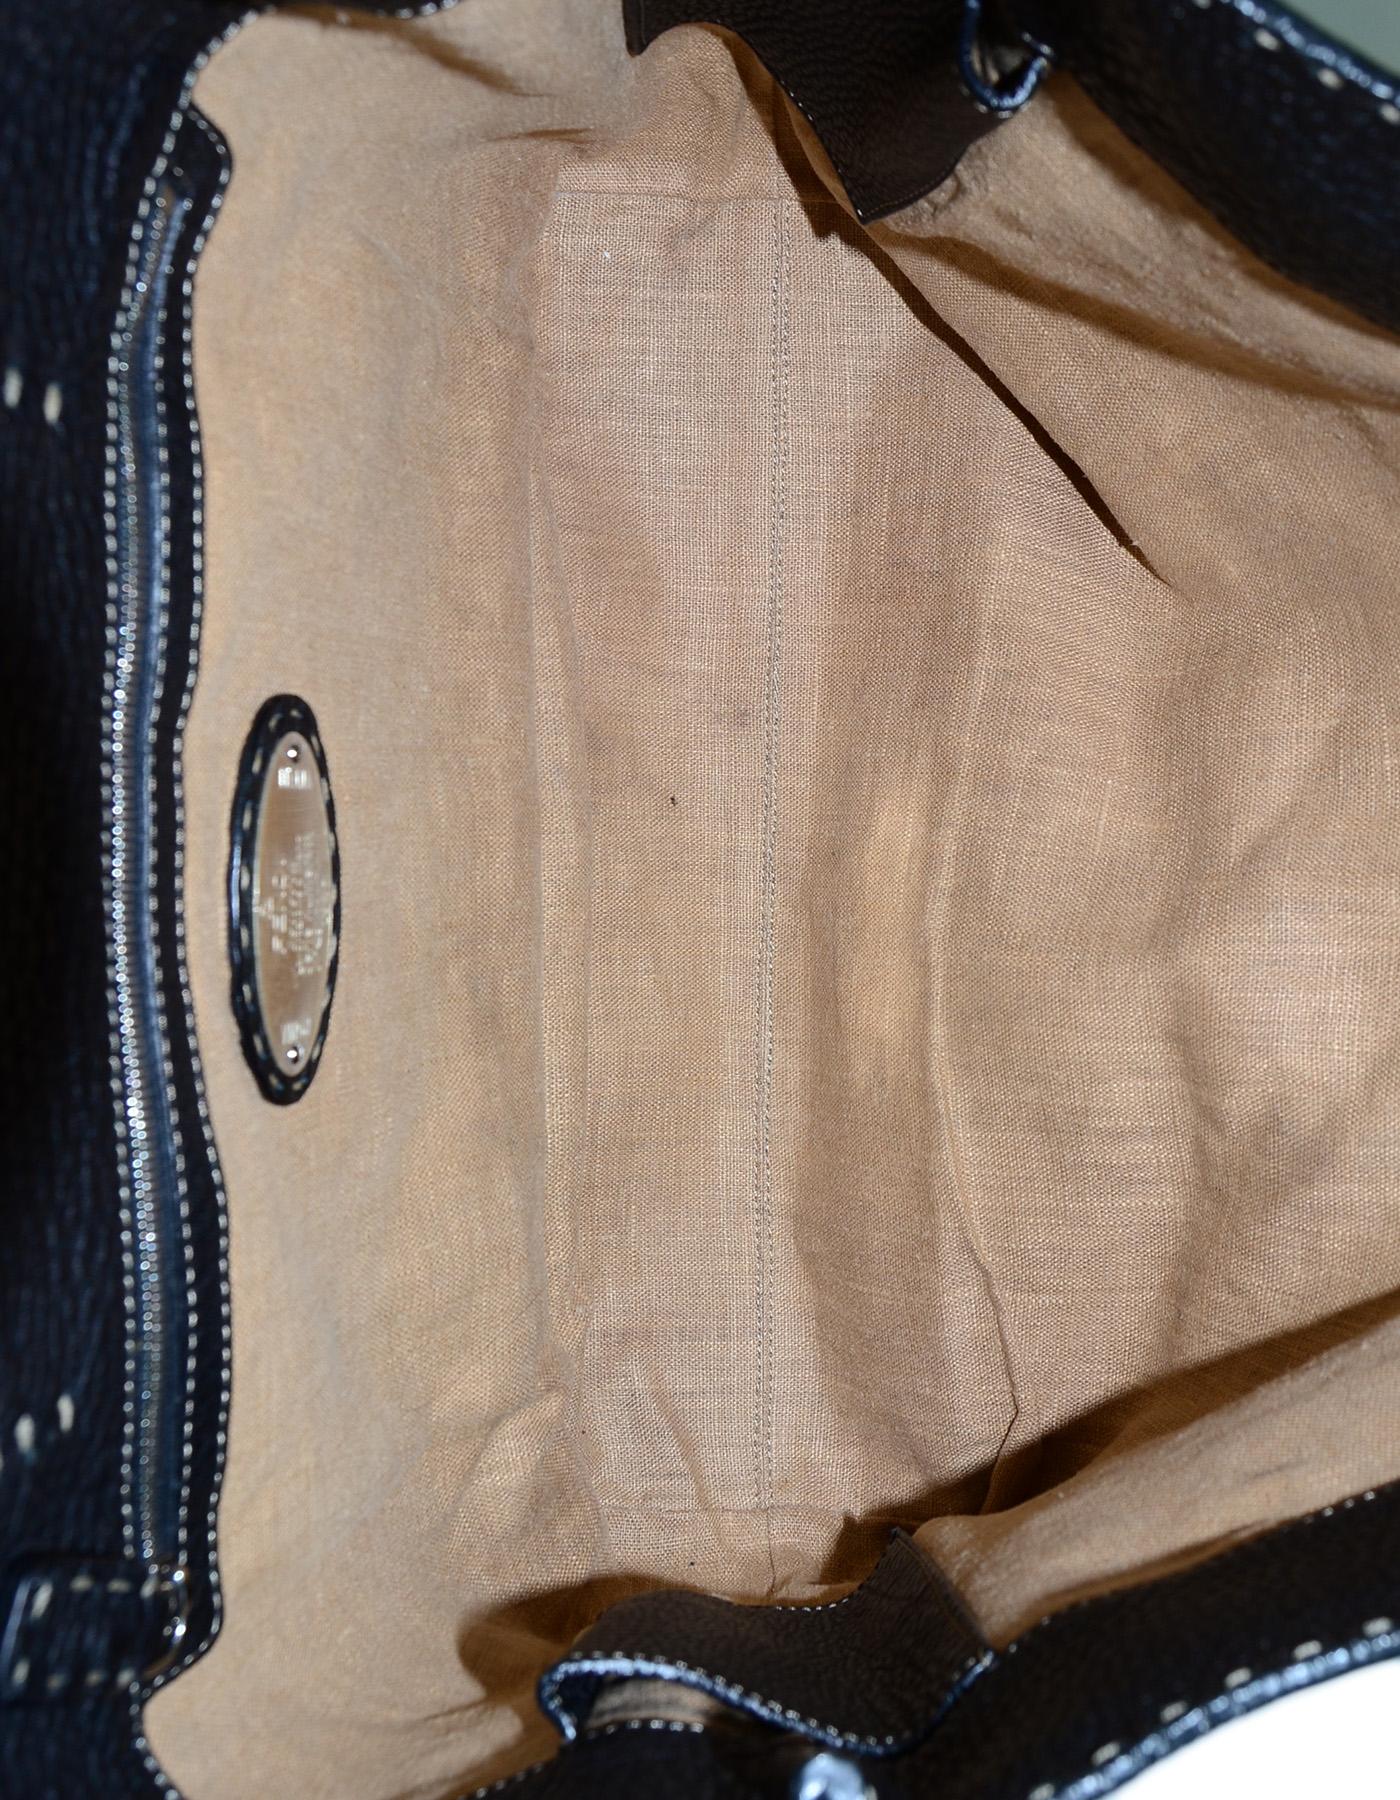 Fendi Black Pebbled Leather Selleria Tote Bag w/ Contrast Stitching 2